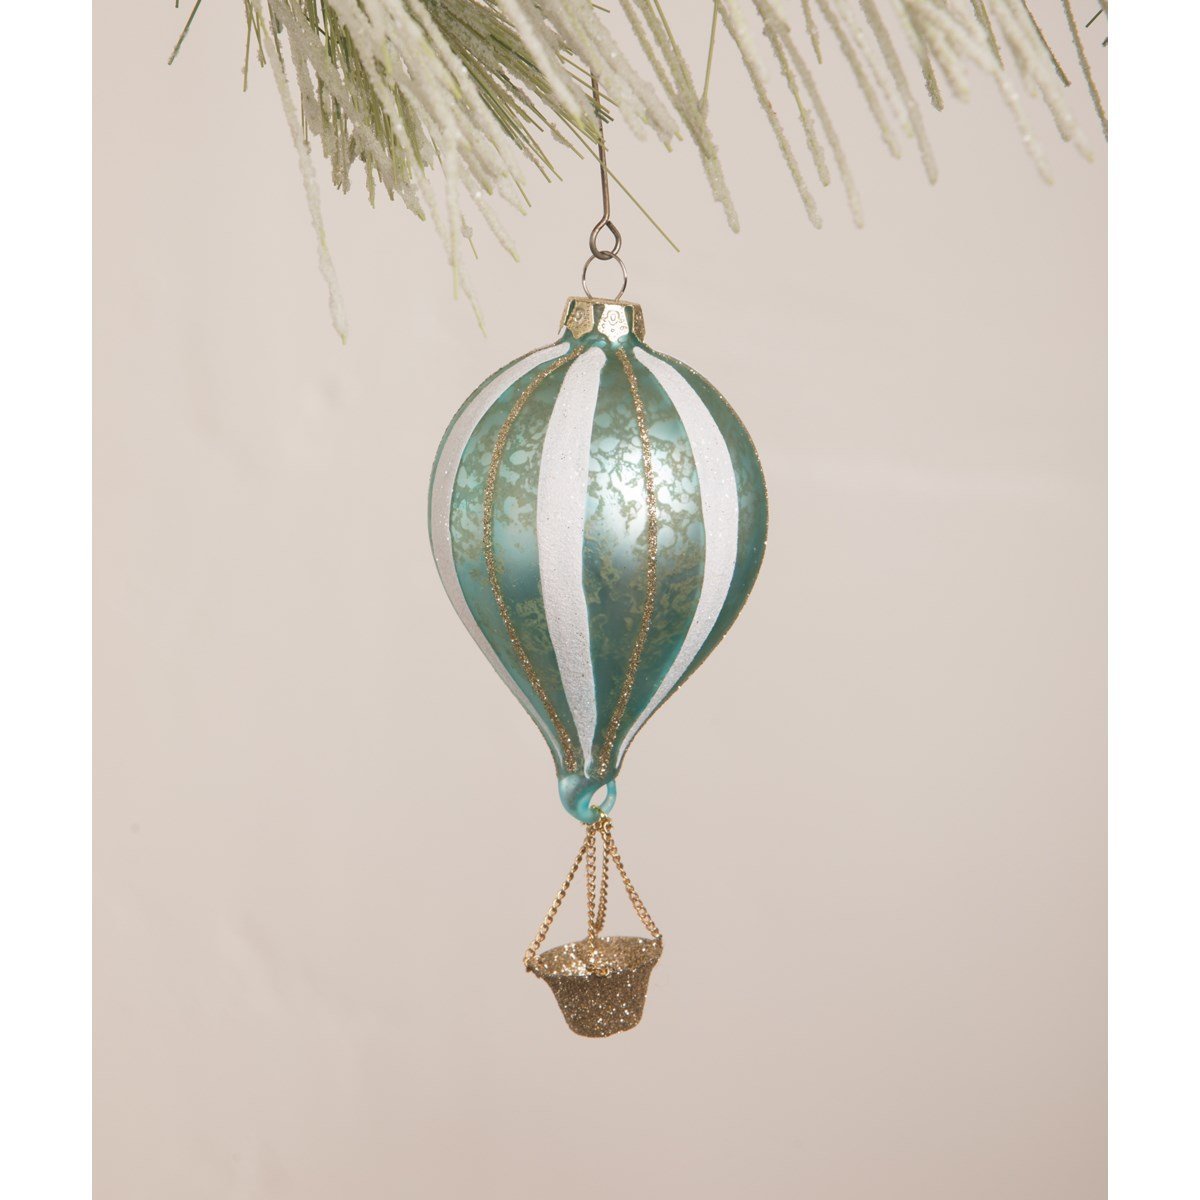 Aqua Striped Hot Air Balloon Ornament - Royalties